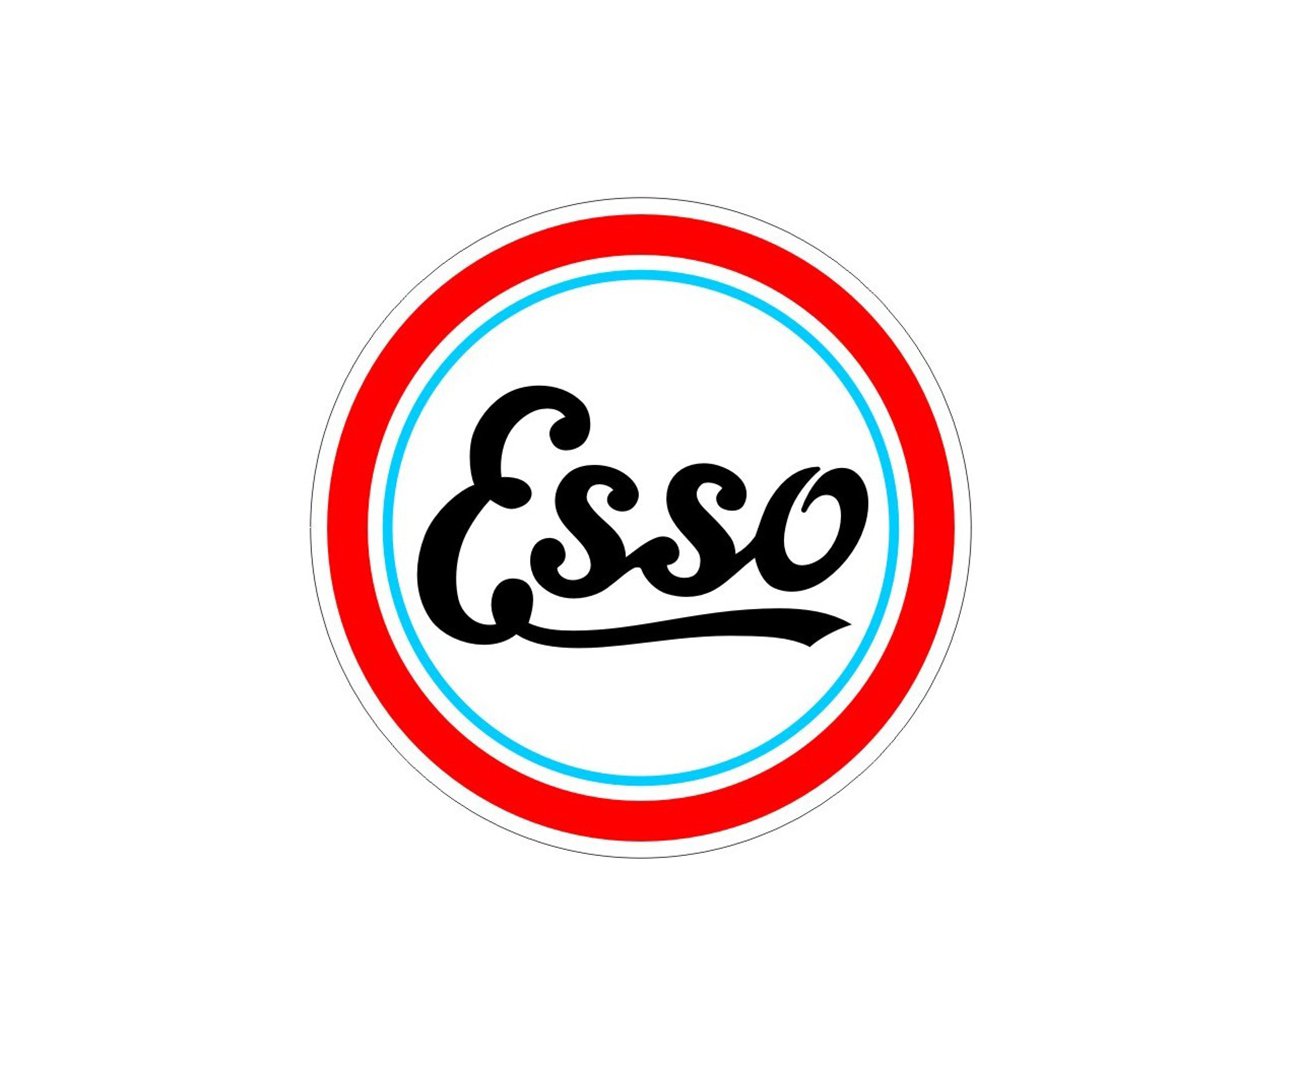 Quadro Logomarca Esso Retro - Geton